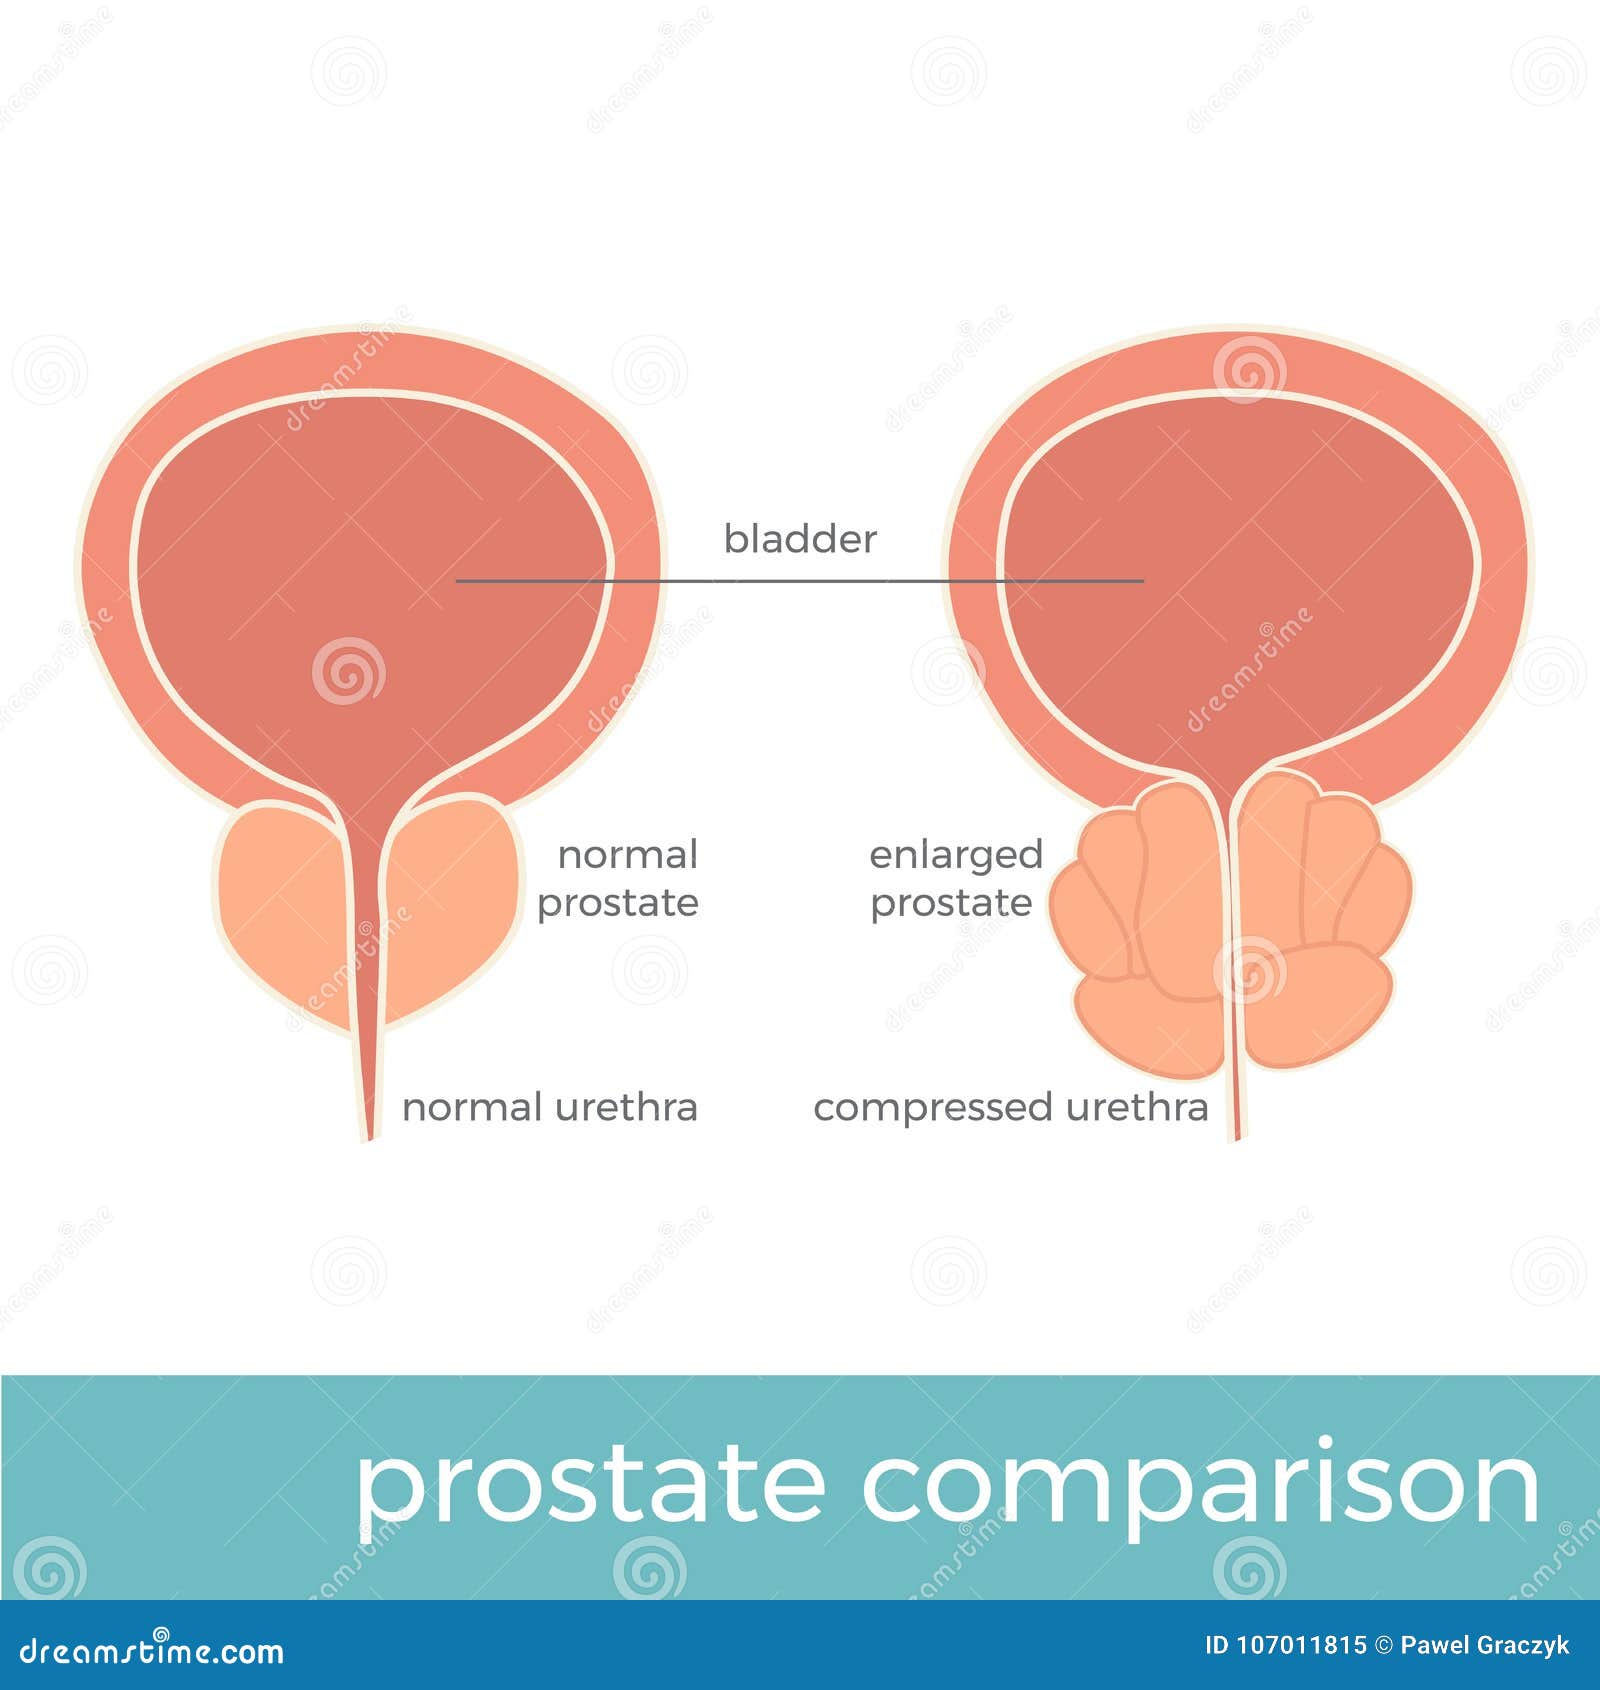 prostate operation